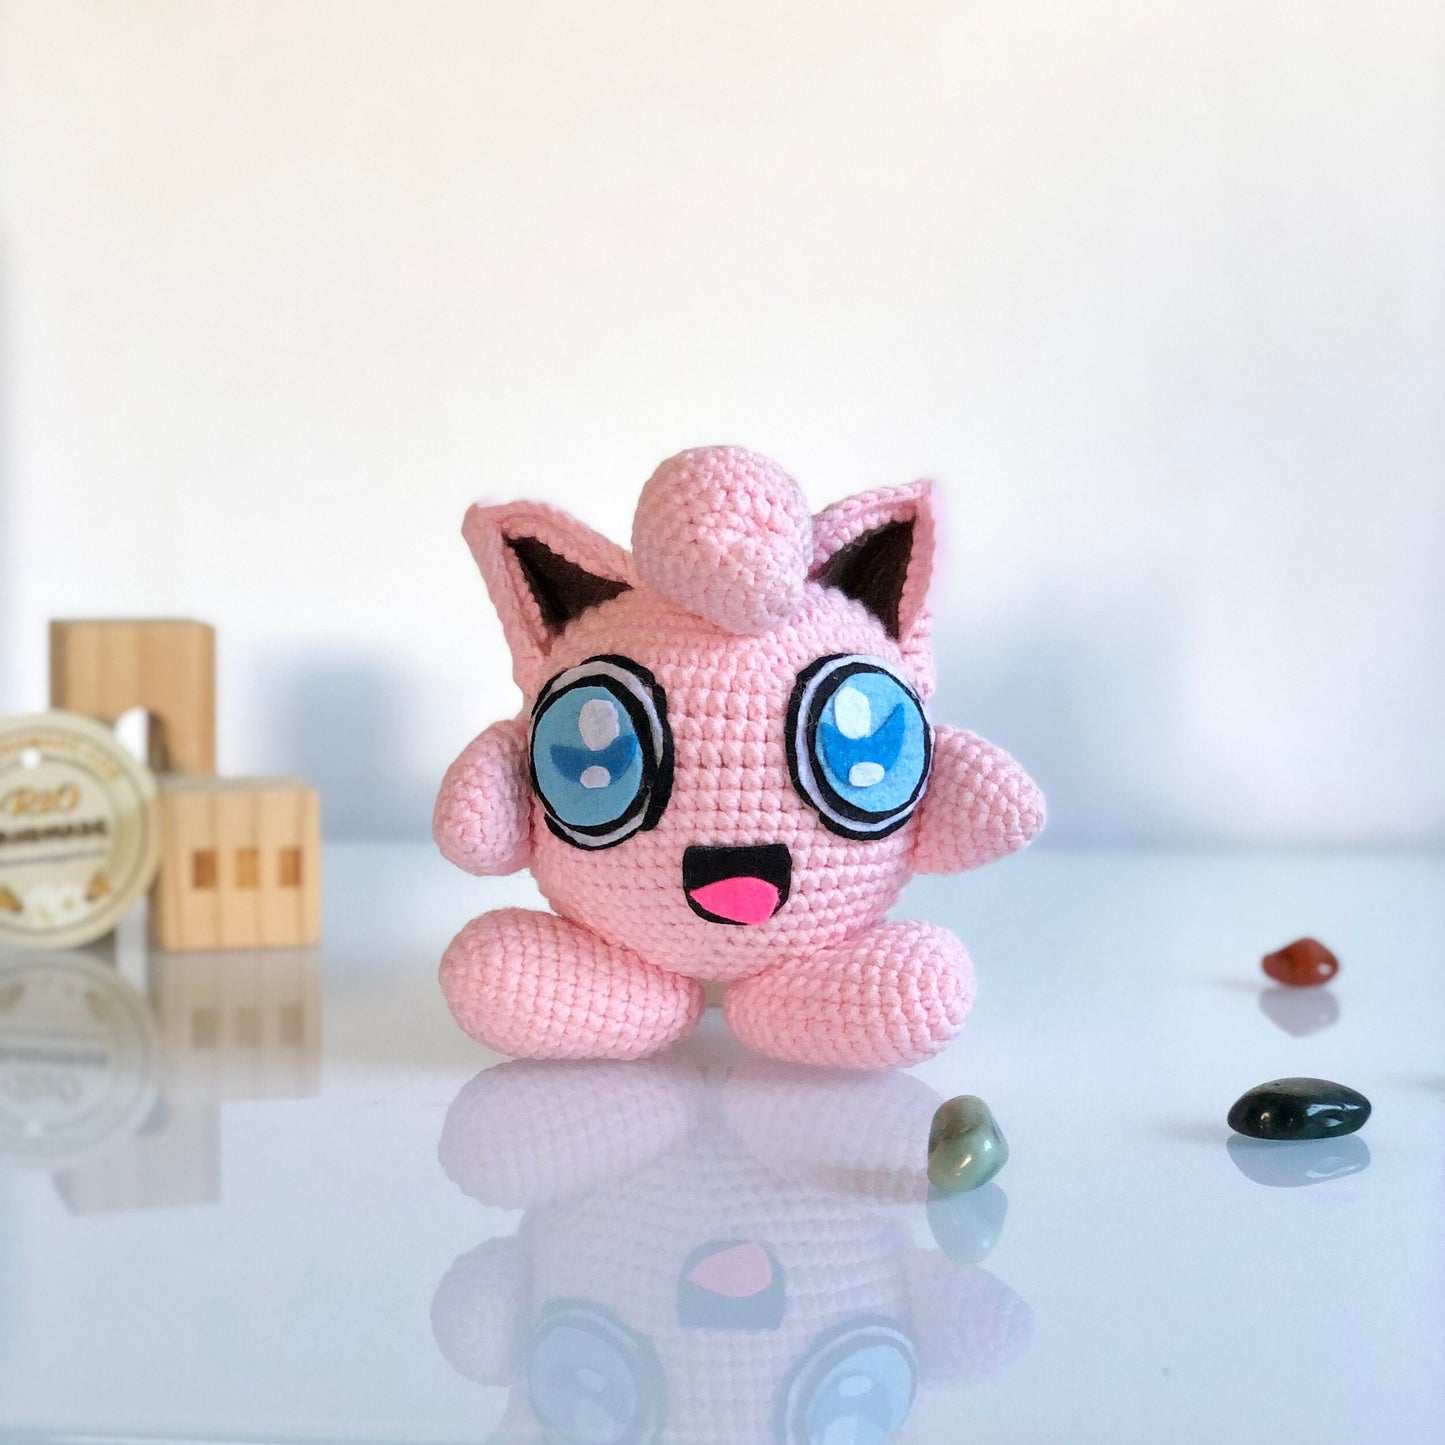 Handmade Yarn Cotton Jigglypuff Inspired, Crochet Jigglypuff inspired by Pokemon, Amigurumi Toy, cute, toddler, kid, adult hobby